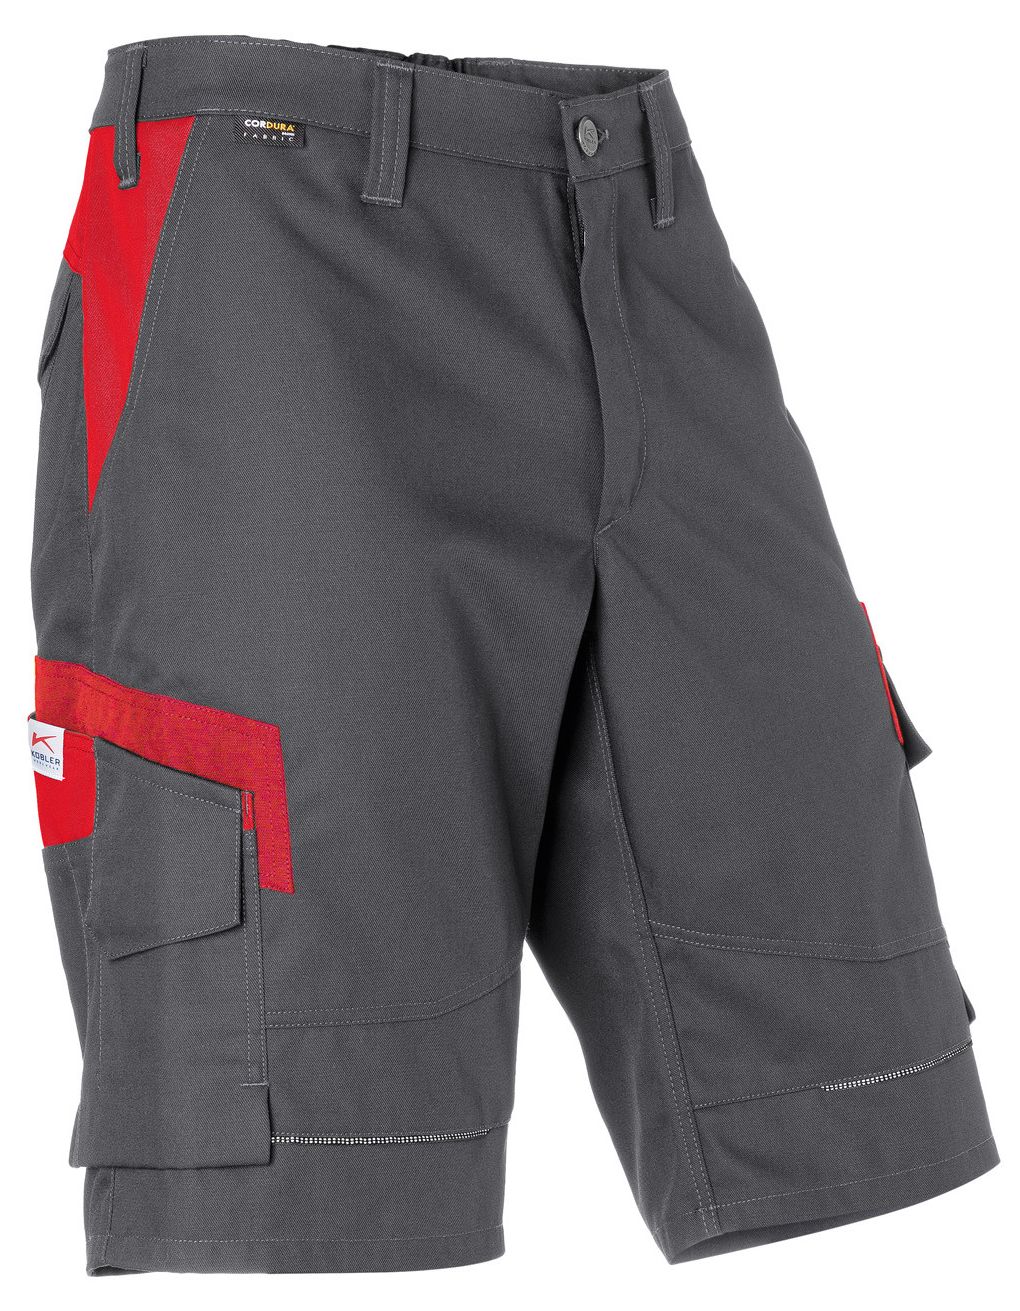 Kübler INNOVATIQ CAS-Technik | Arbeitsschutz 5370 | Industriebedarf - 2430 Shorts Bekleidung Shorts | 